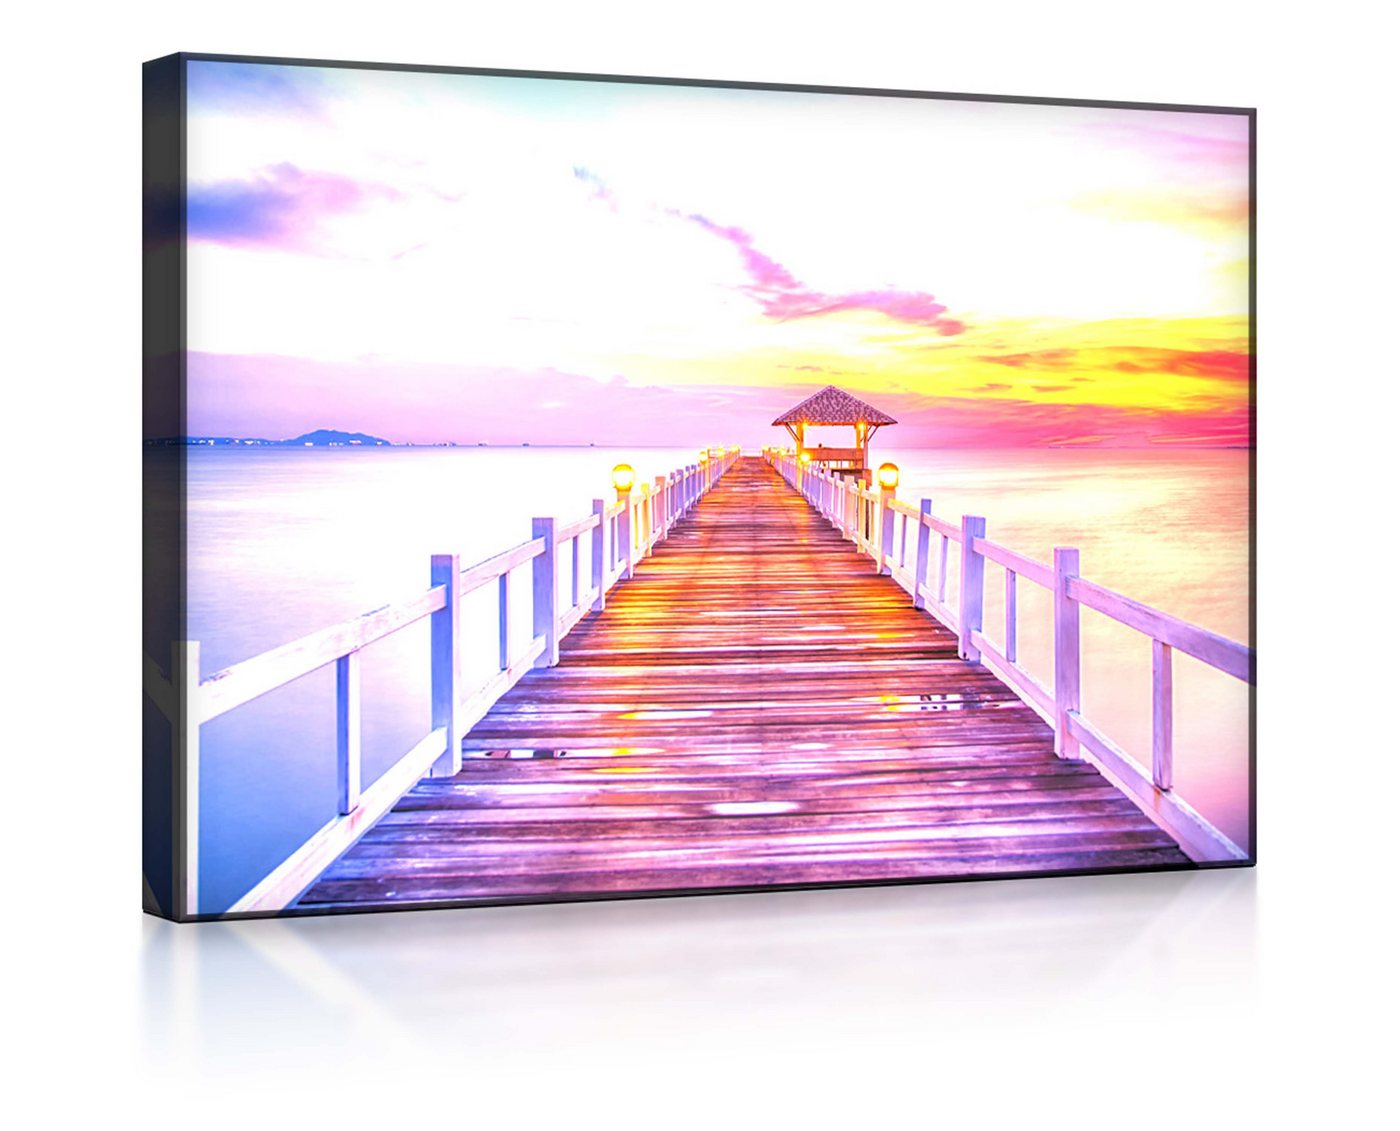 lightbox-multicolor LED-Bild Steg ins Meer bei Sonnenuntergang front lighted / 60x40cm, Leuchtbild mit Fernbedienung von lightbox-multicolor